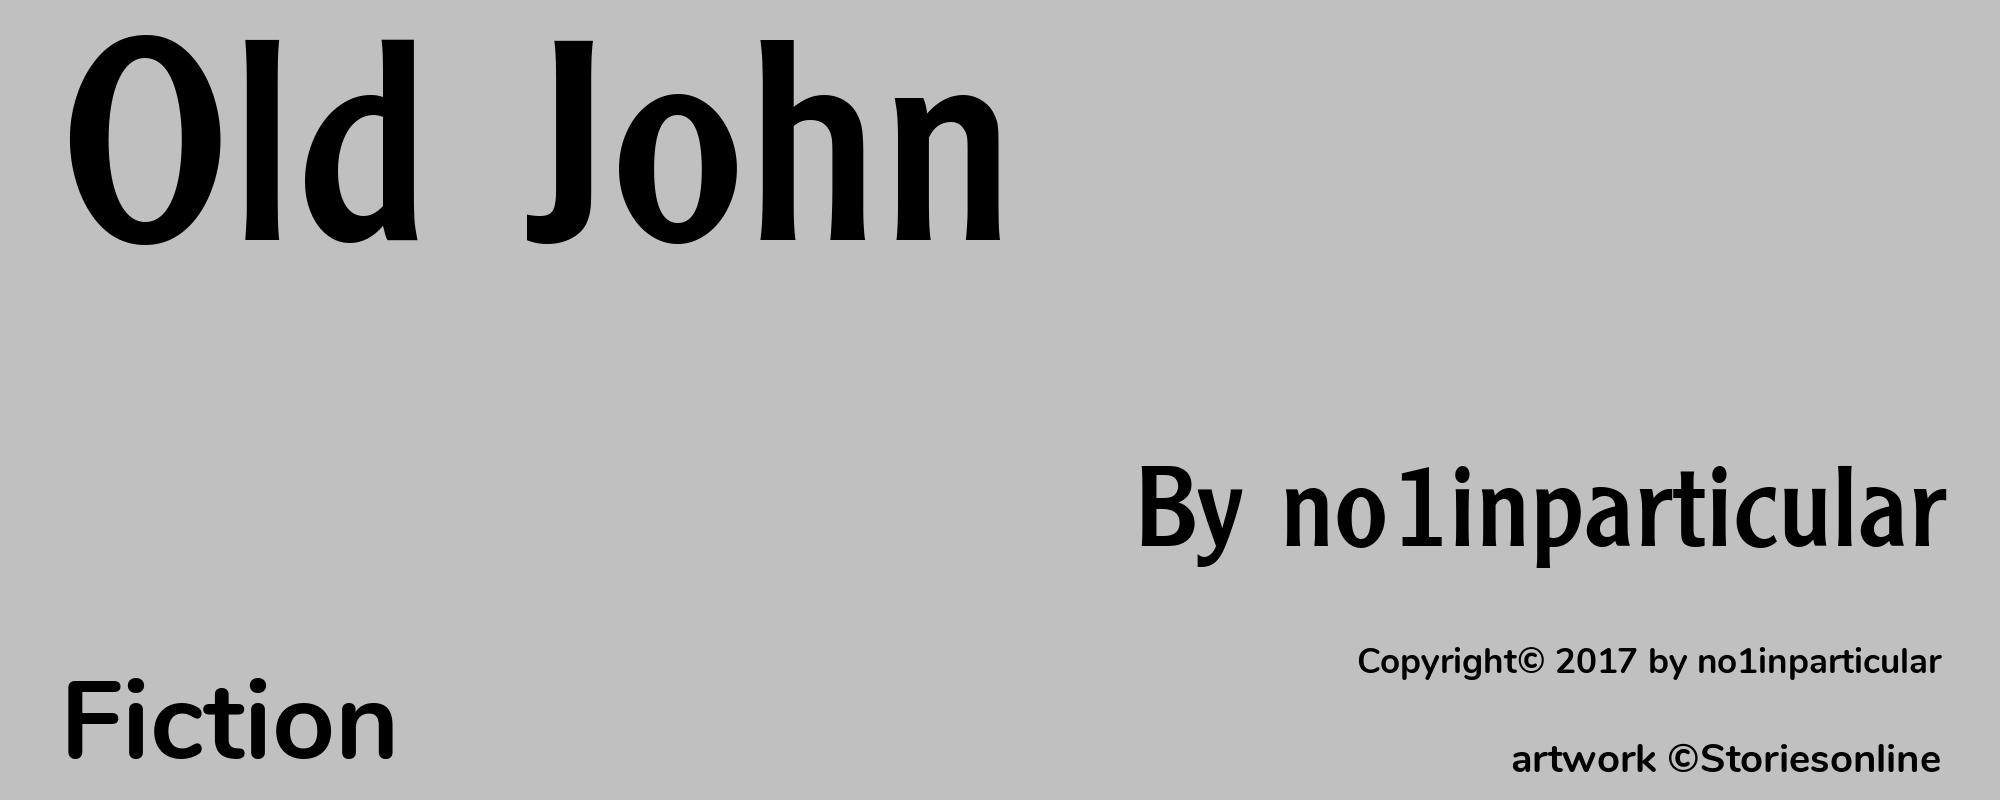 Old John - Cover